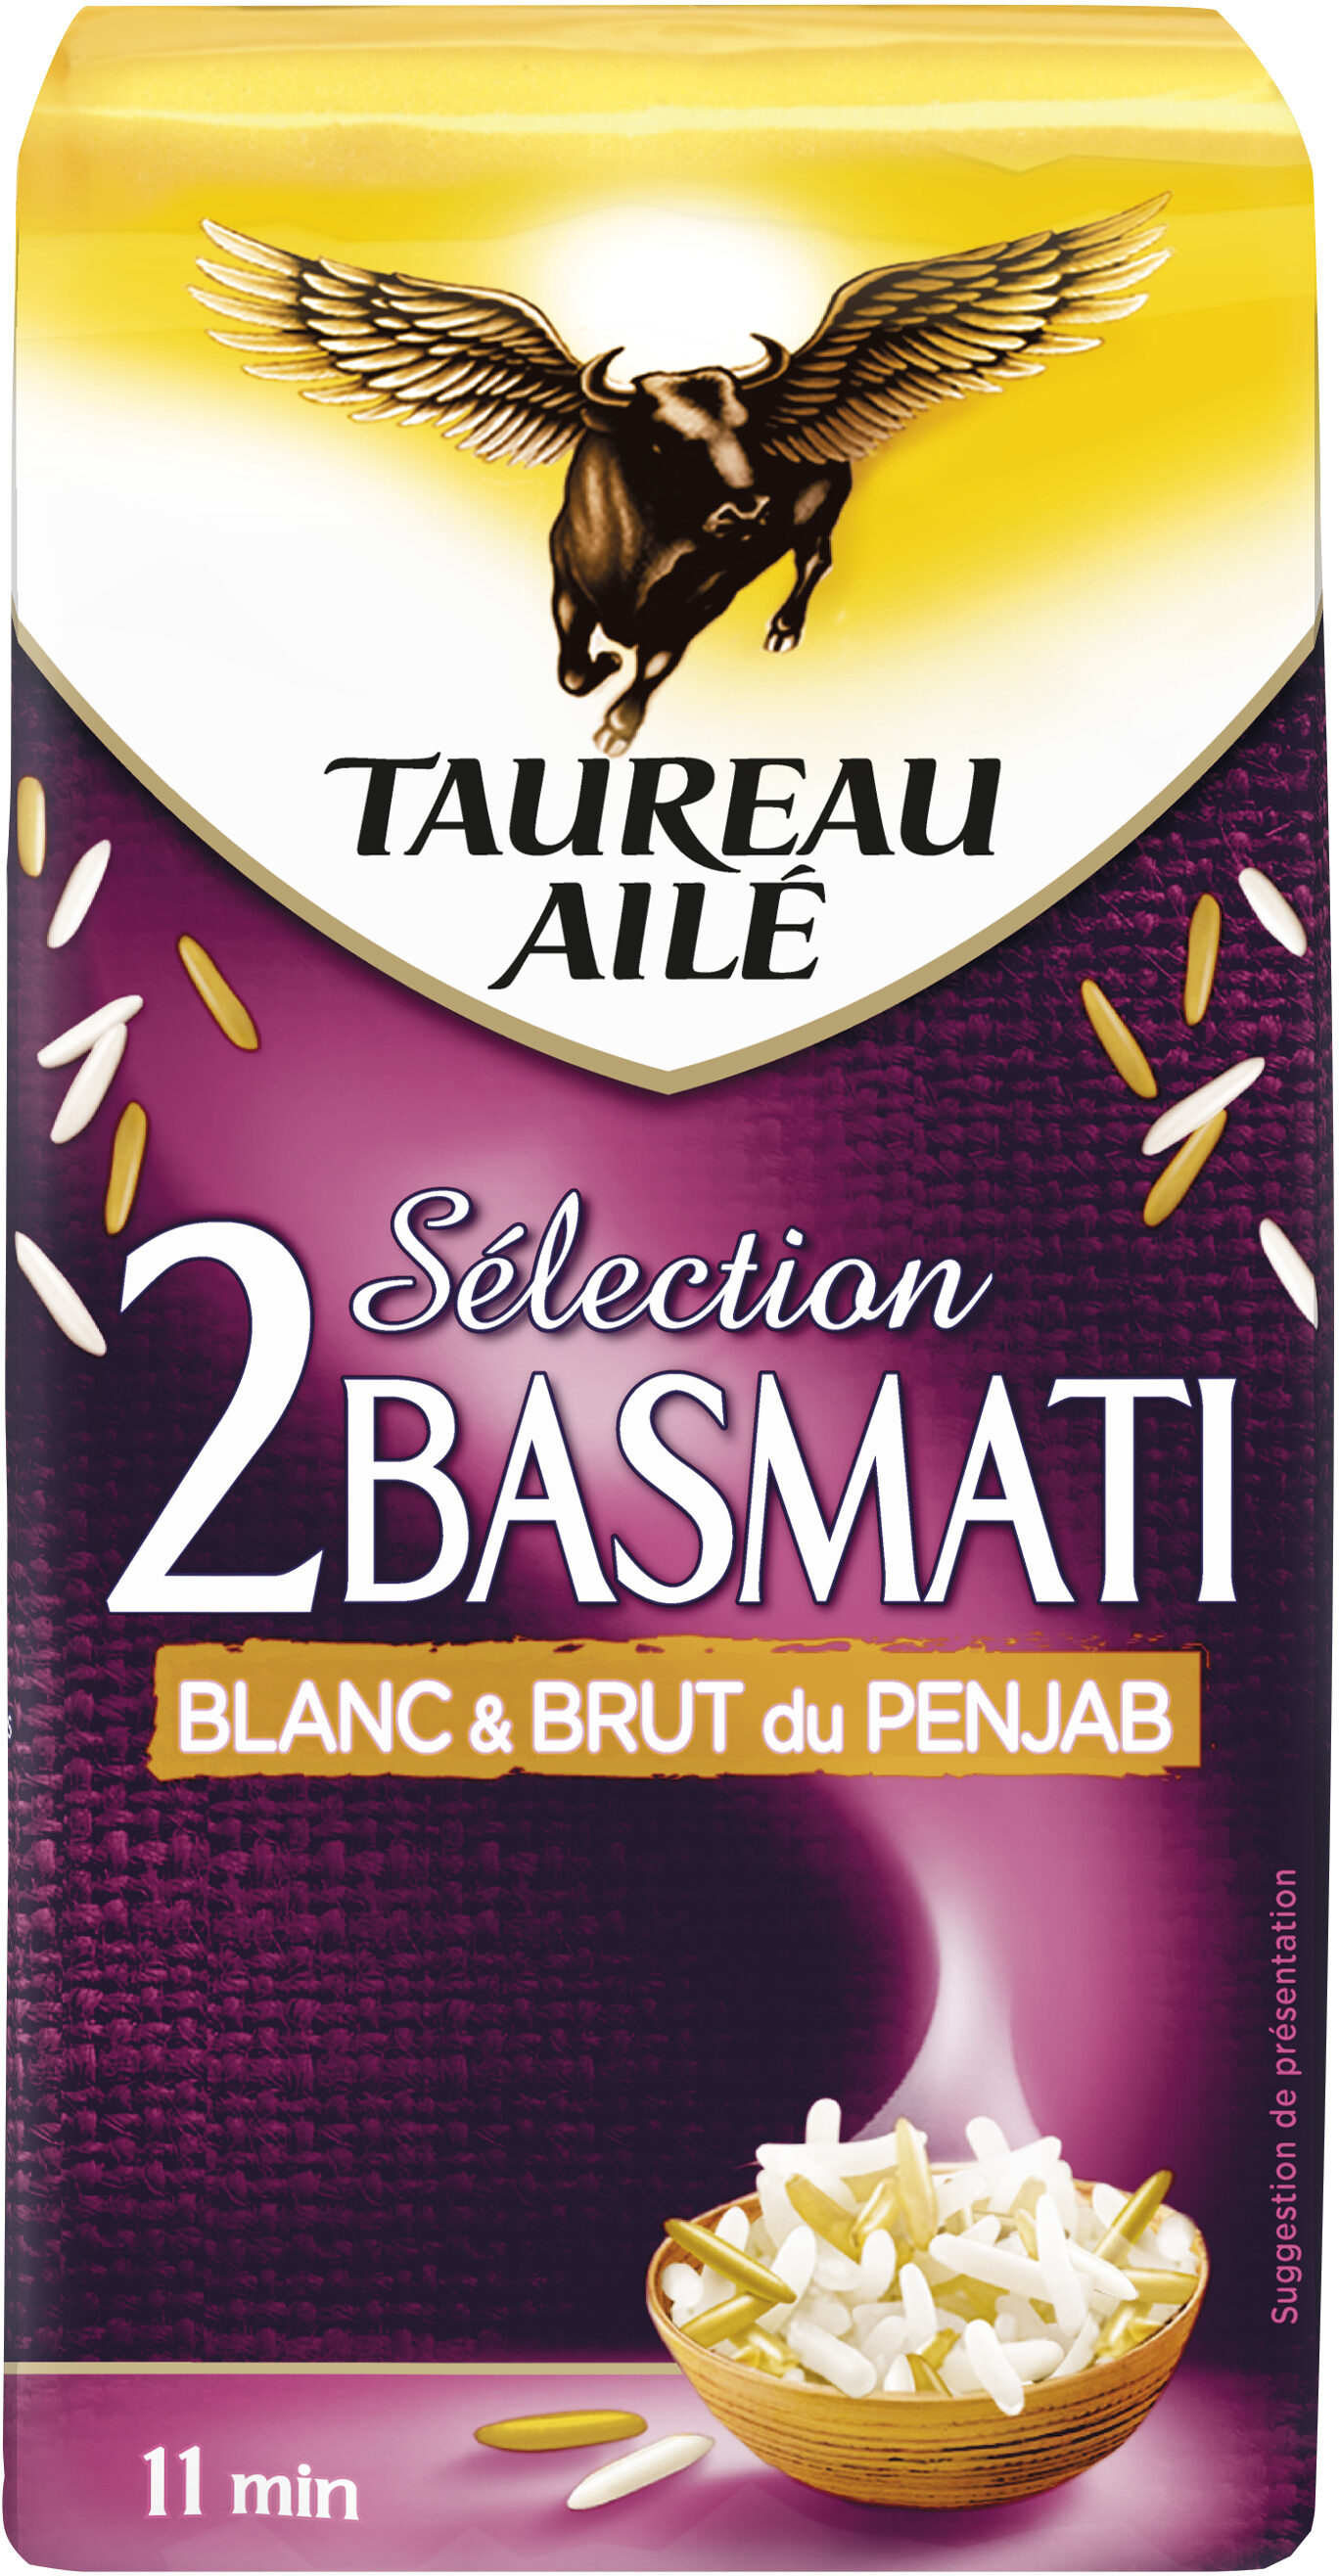 Sélection 2 basmati Blanc & Bruit du Penjab - Product - fr